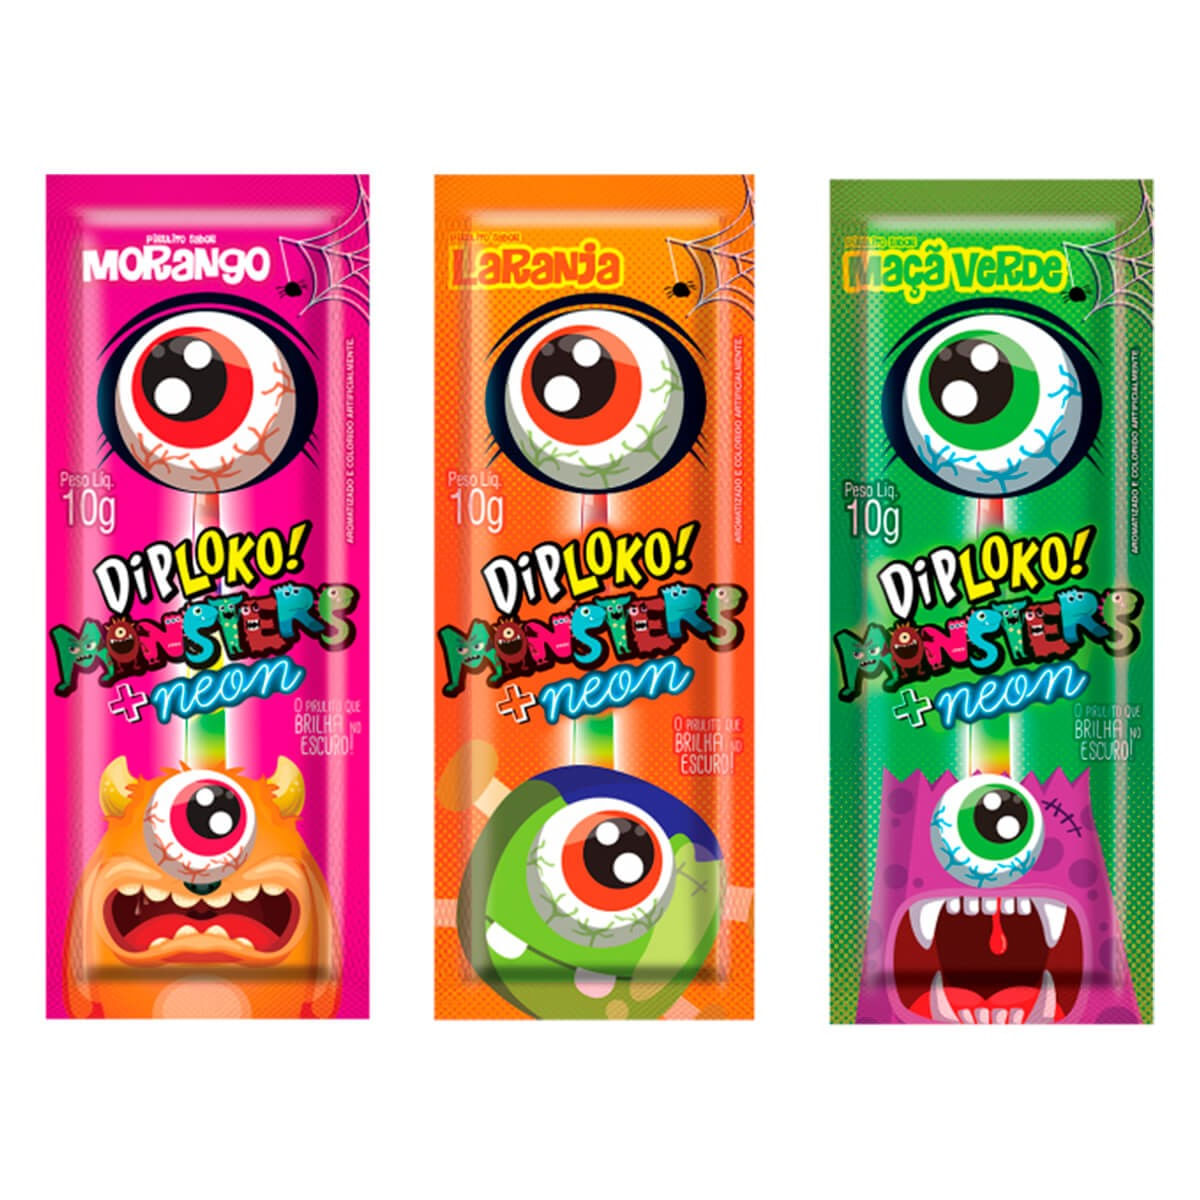 Dip Loko Monsters Sabores + Neon Pirulito Fluorescente 10g Danilla Foods